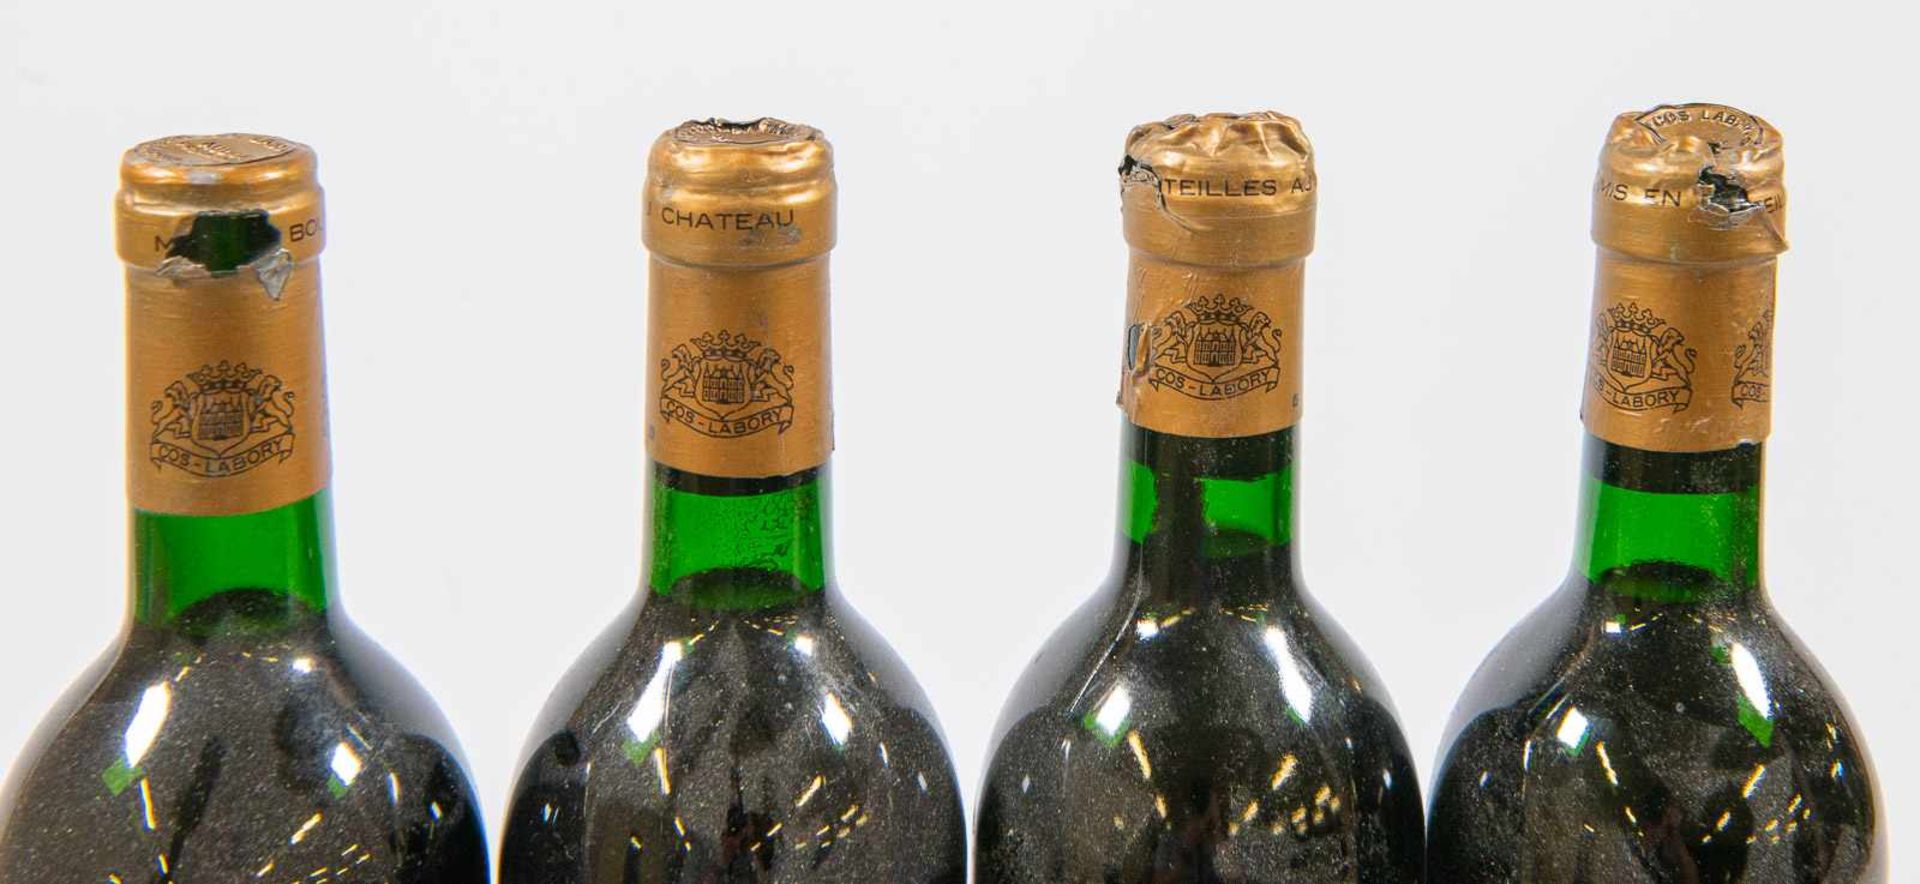 Chateau Cos Labory, 1985, 4 bottles Length: 0 cm , Width: 0 cm, Hight: 0 cm, Diameter: 0 cm - Image 3 of 3